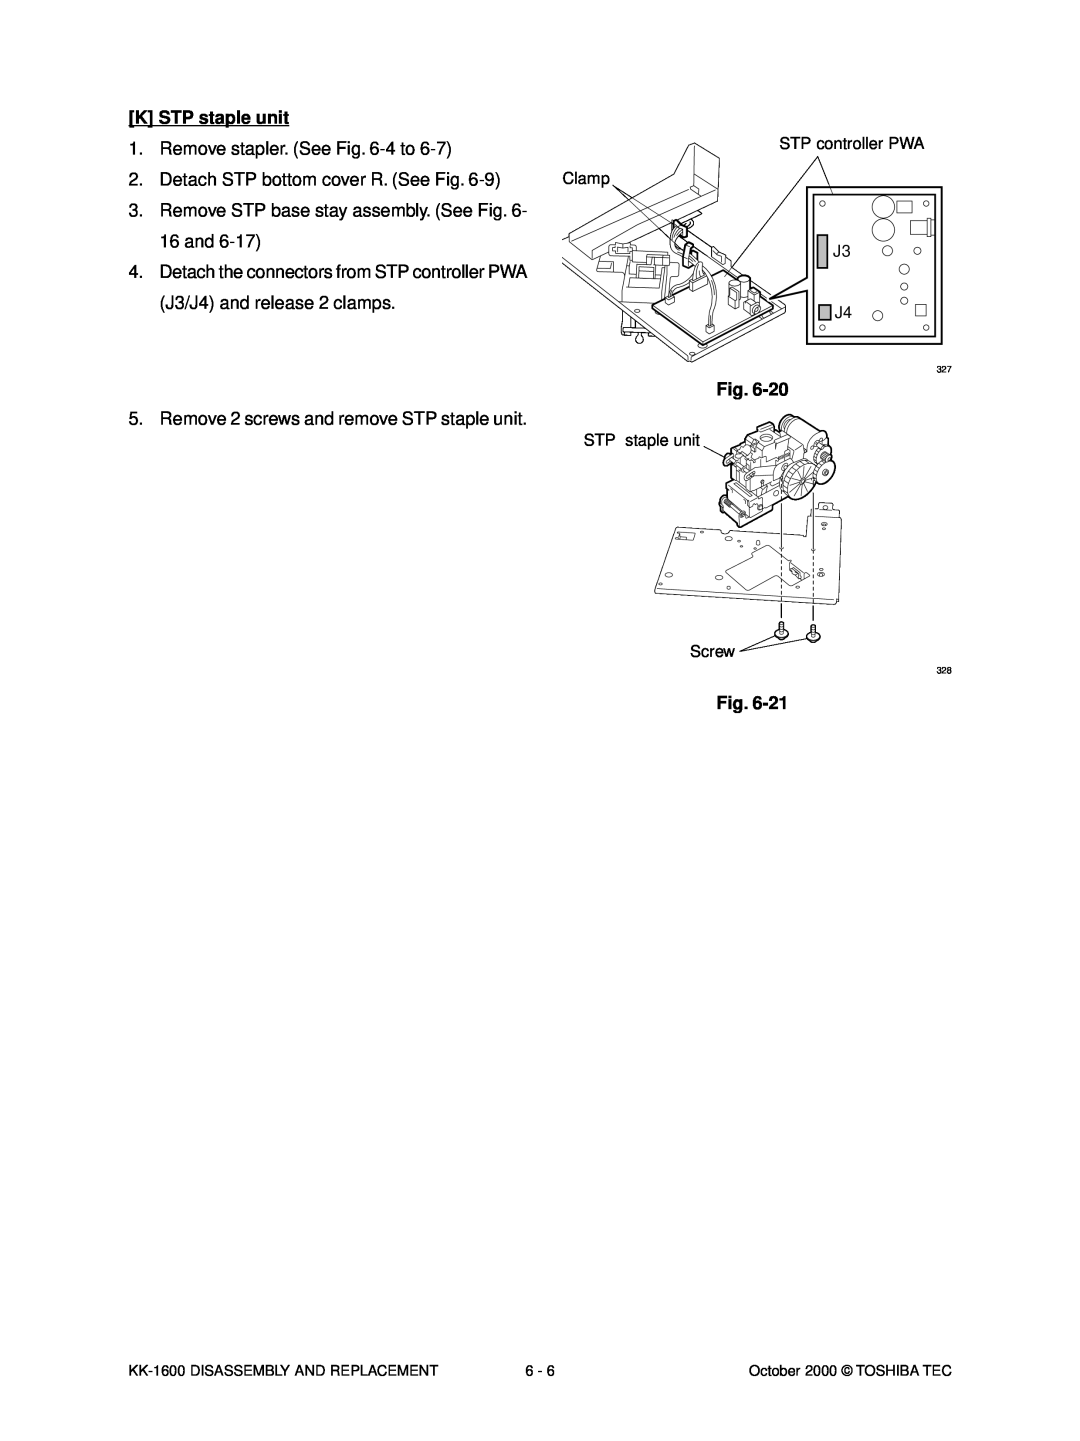 Toshiba KK-1600 manual K STP staple unit, Remove stapler. See -4 to, Detach STP bottom cover R. See Fig, Clamp 